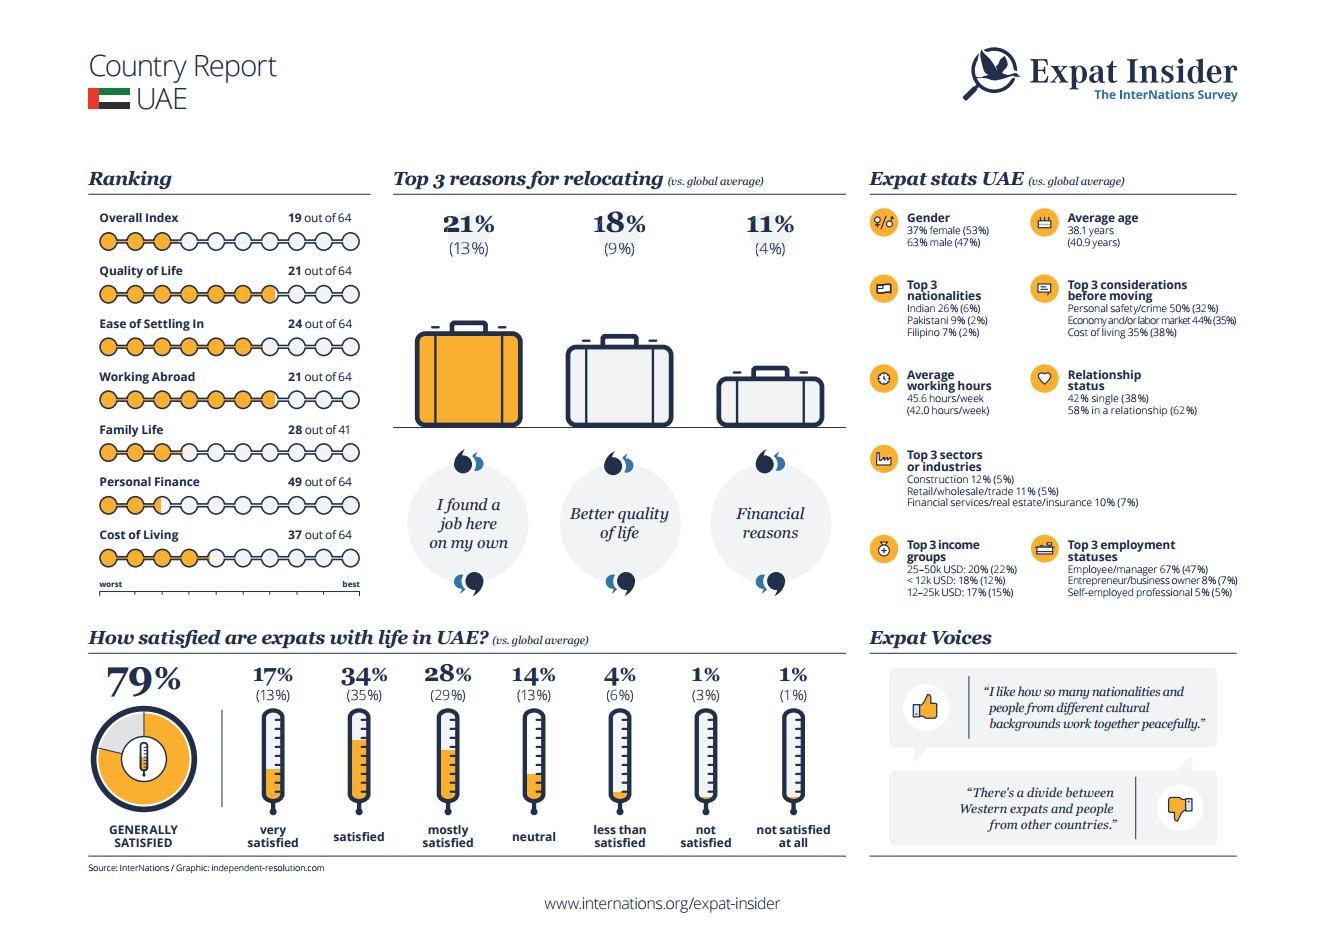 Expat statistics for the UAE - infographic